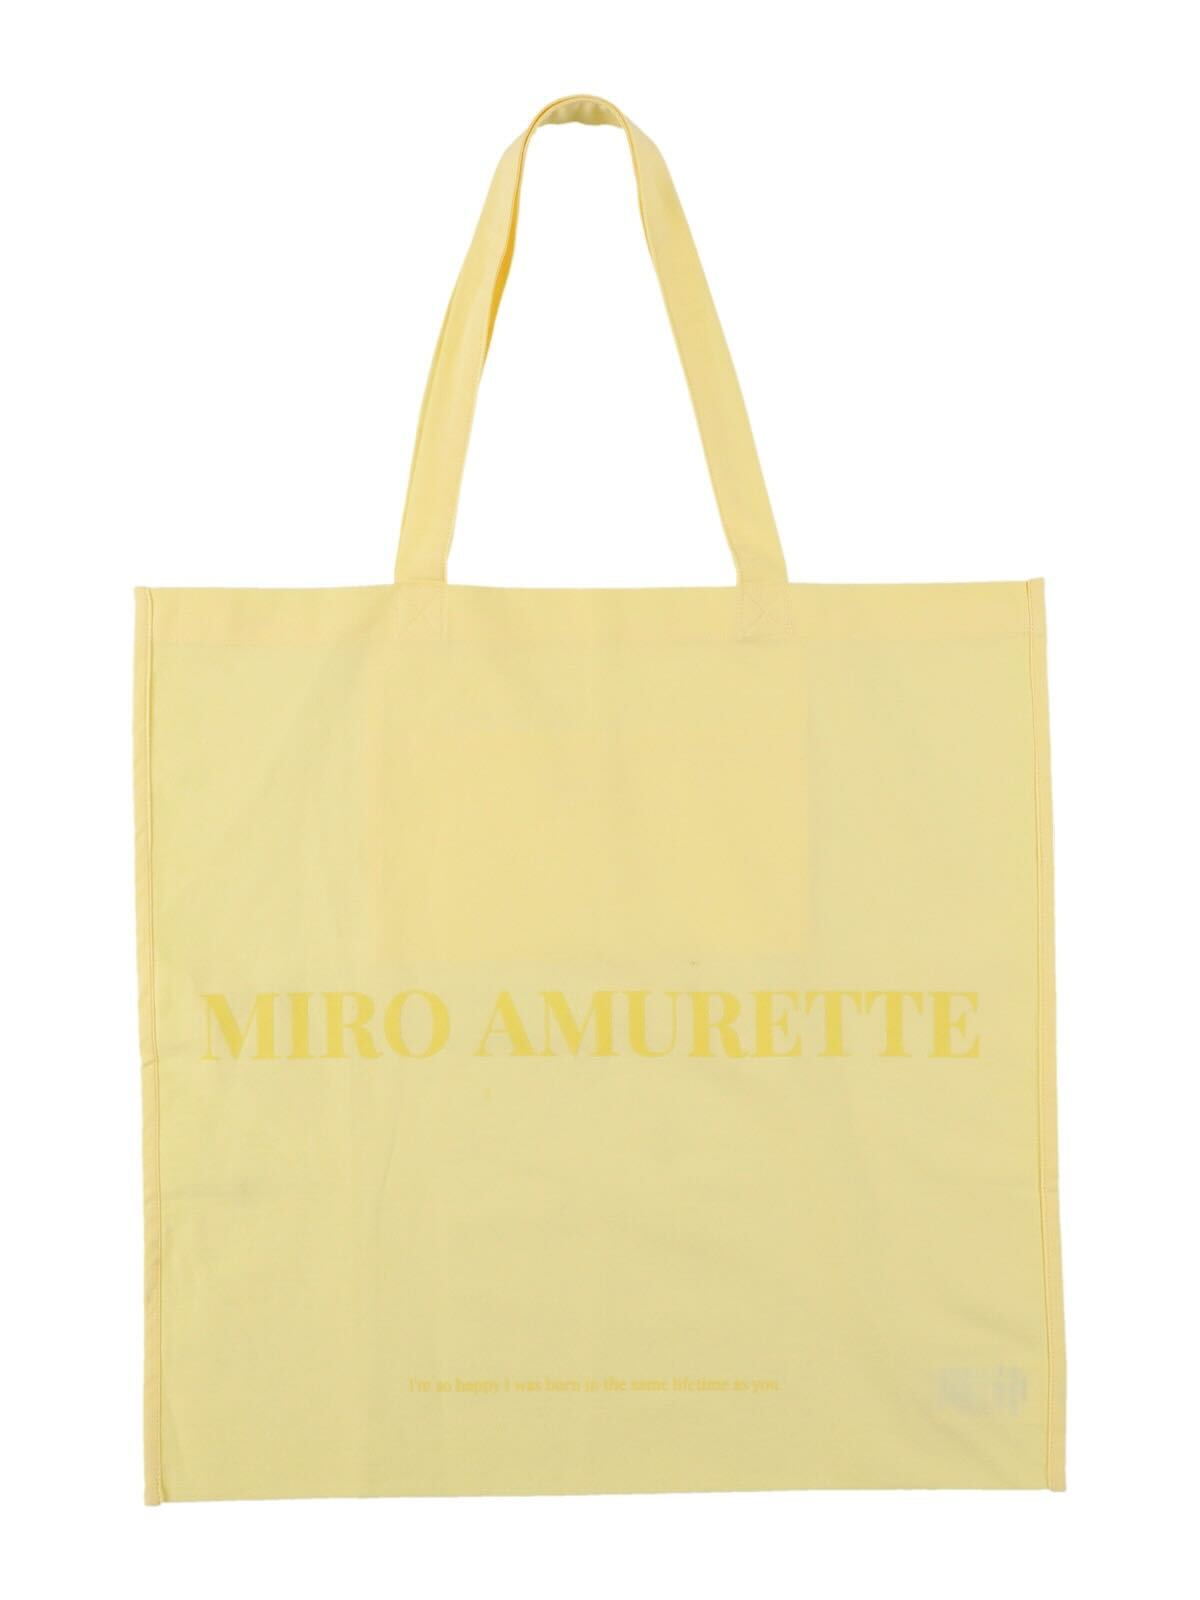 Miro amurette トートバッグ MIRO TOTE NO.10 - トートバッグ